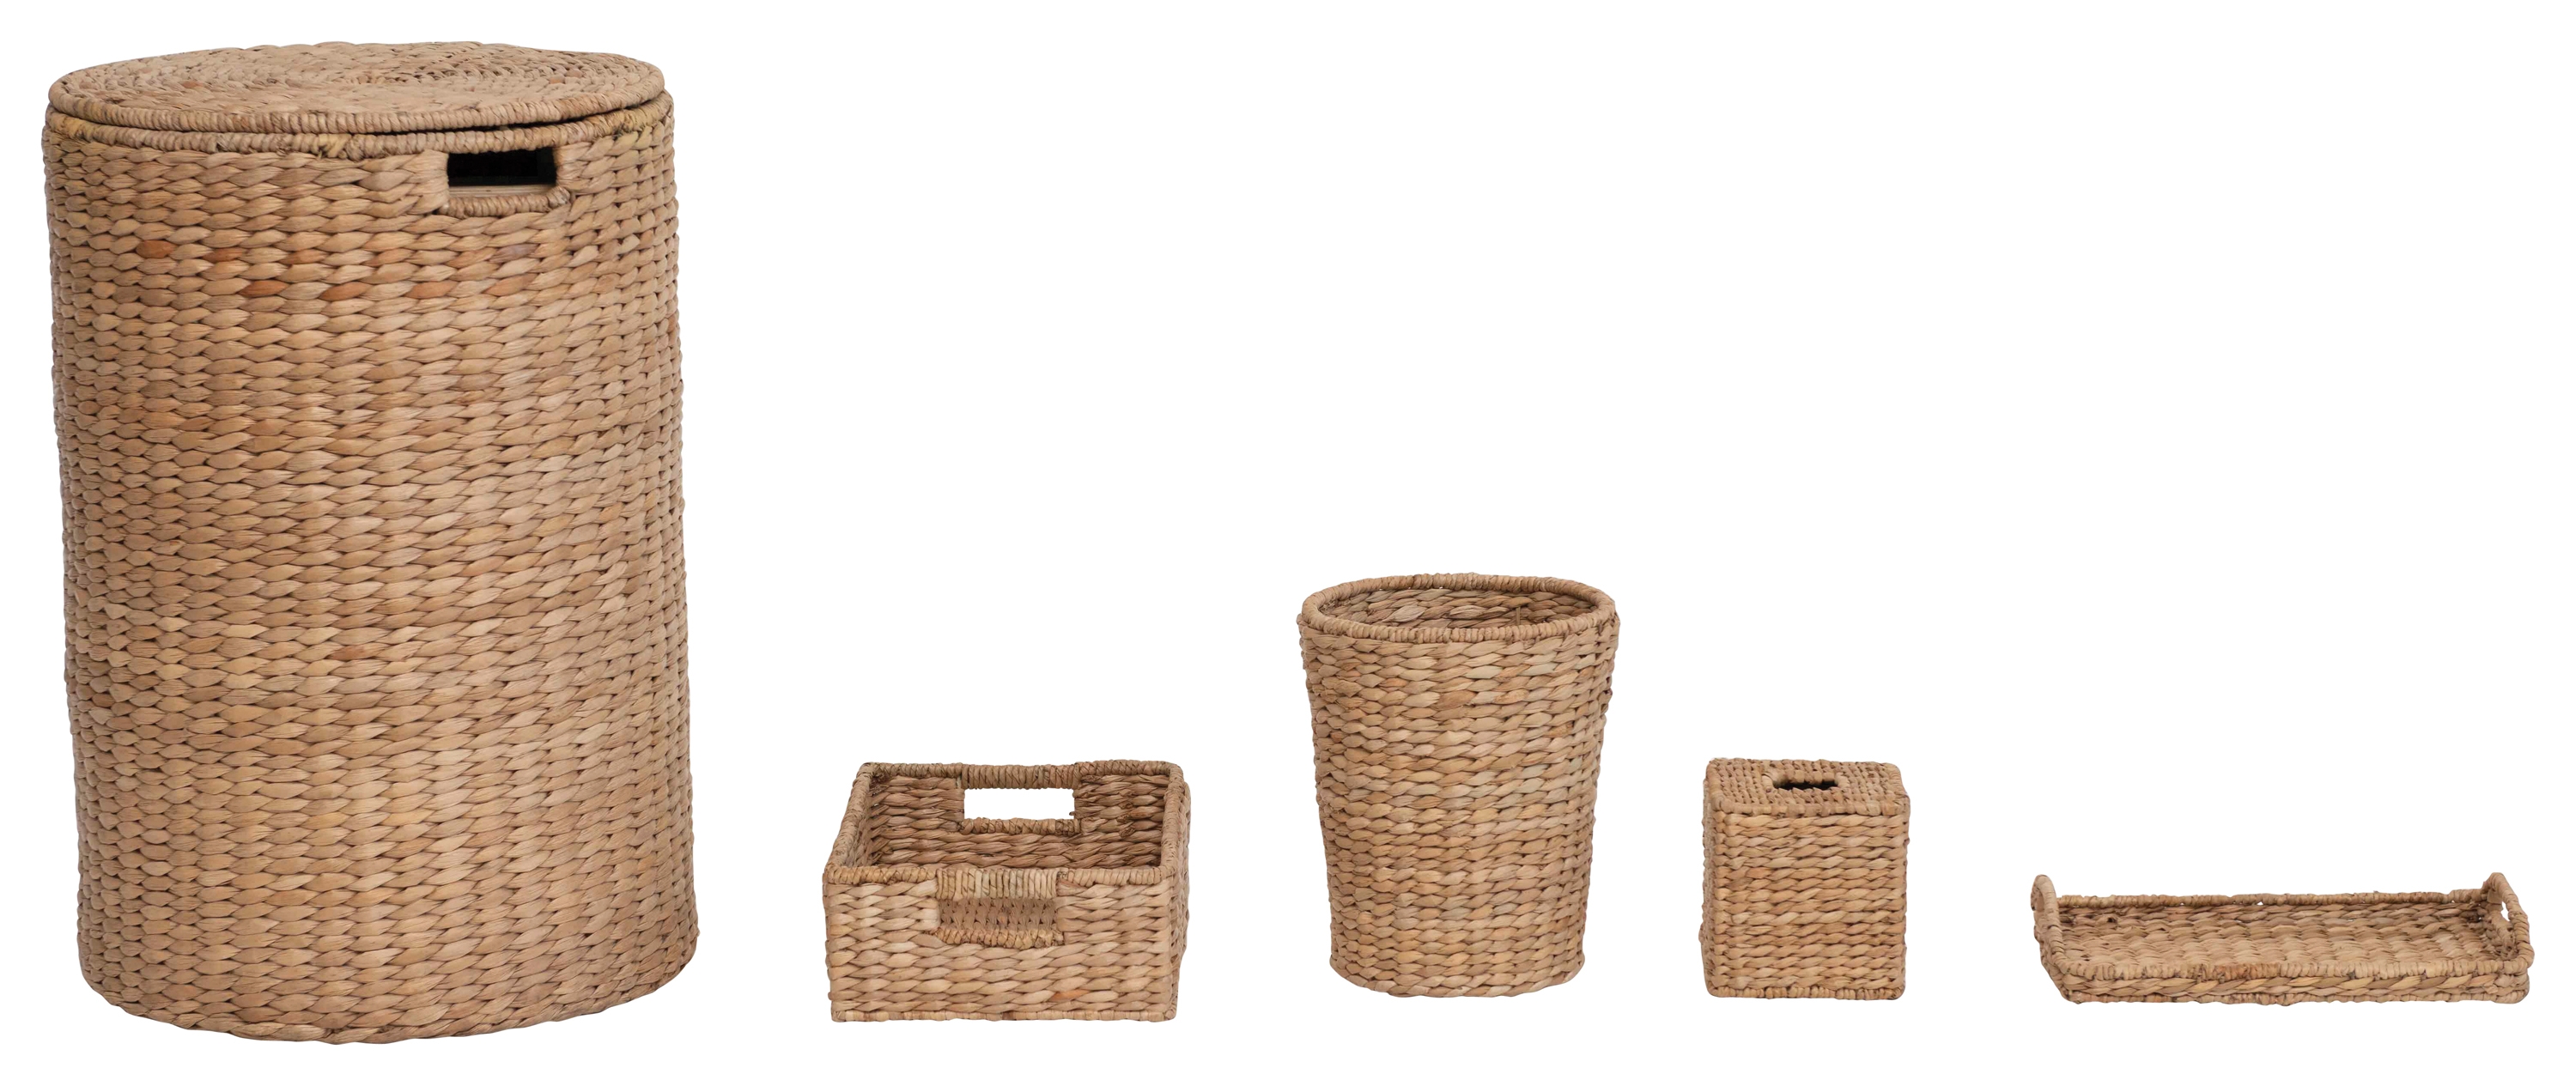 5-Piece Handwoven Seagrass Bathroom Accessories (Includes Laundry Basket, Waste Bin, Tissue Holder, Tray & Basket) - Image 0